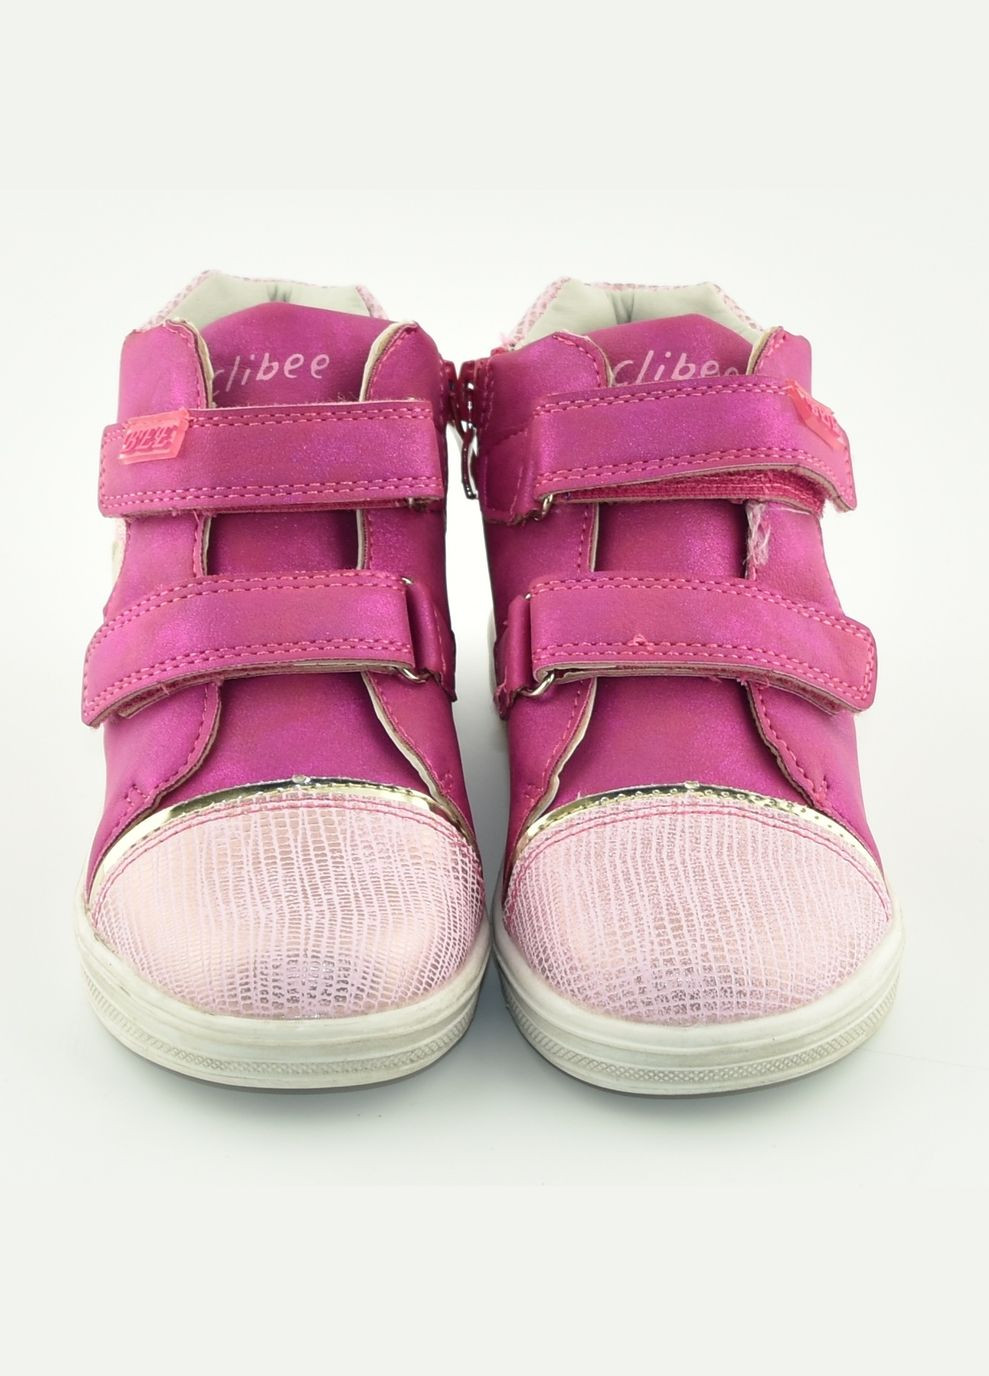 Дитячі черевики P107peach, 15, Clibee (292708837)